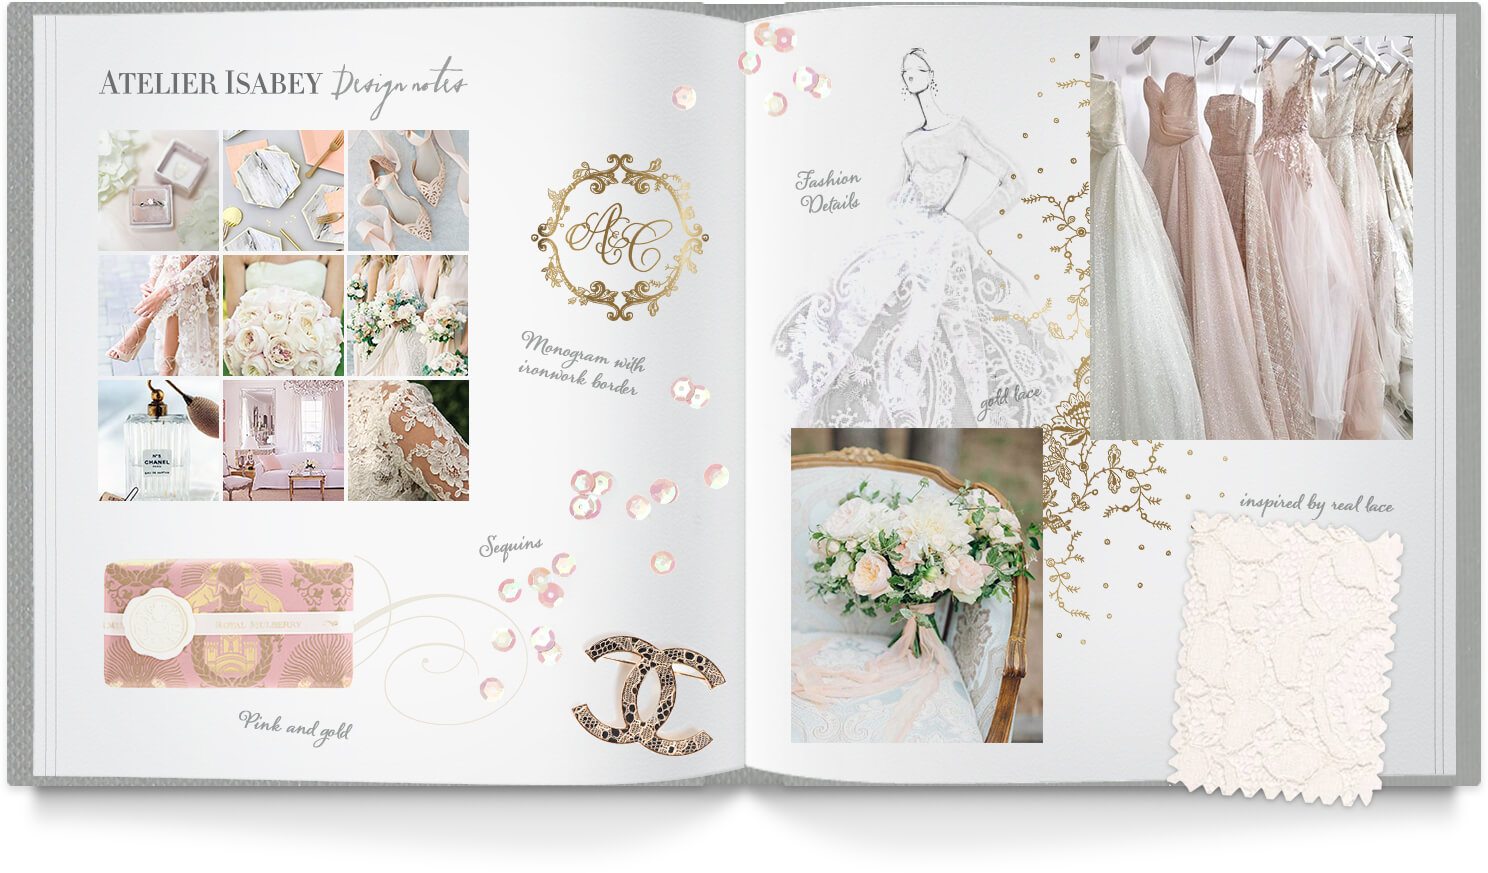 Blush romantic and elegant wedding inspiration